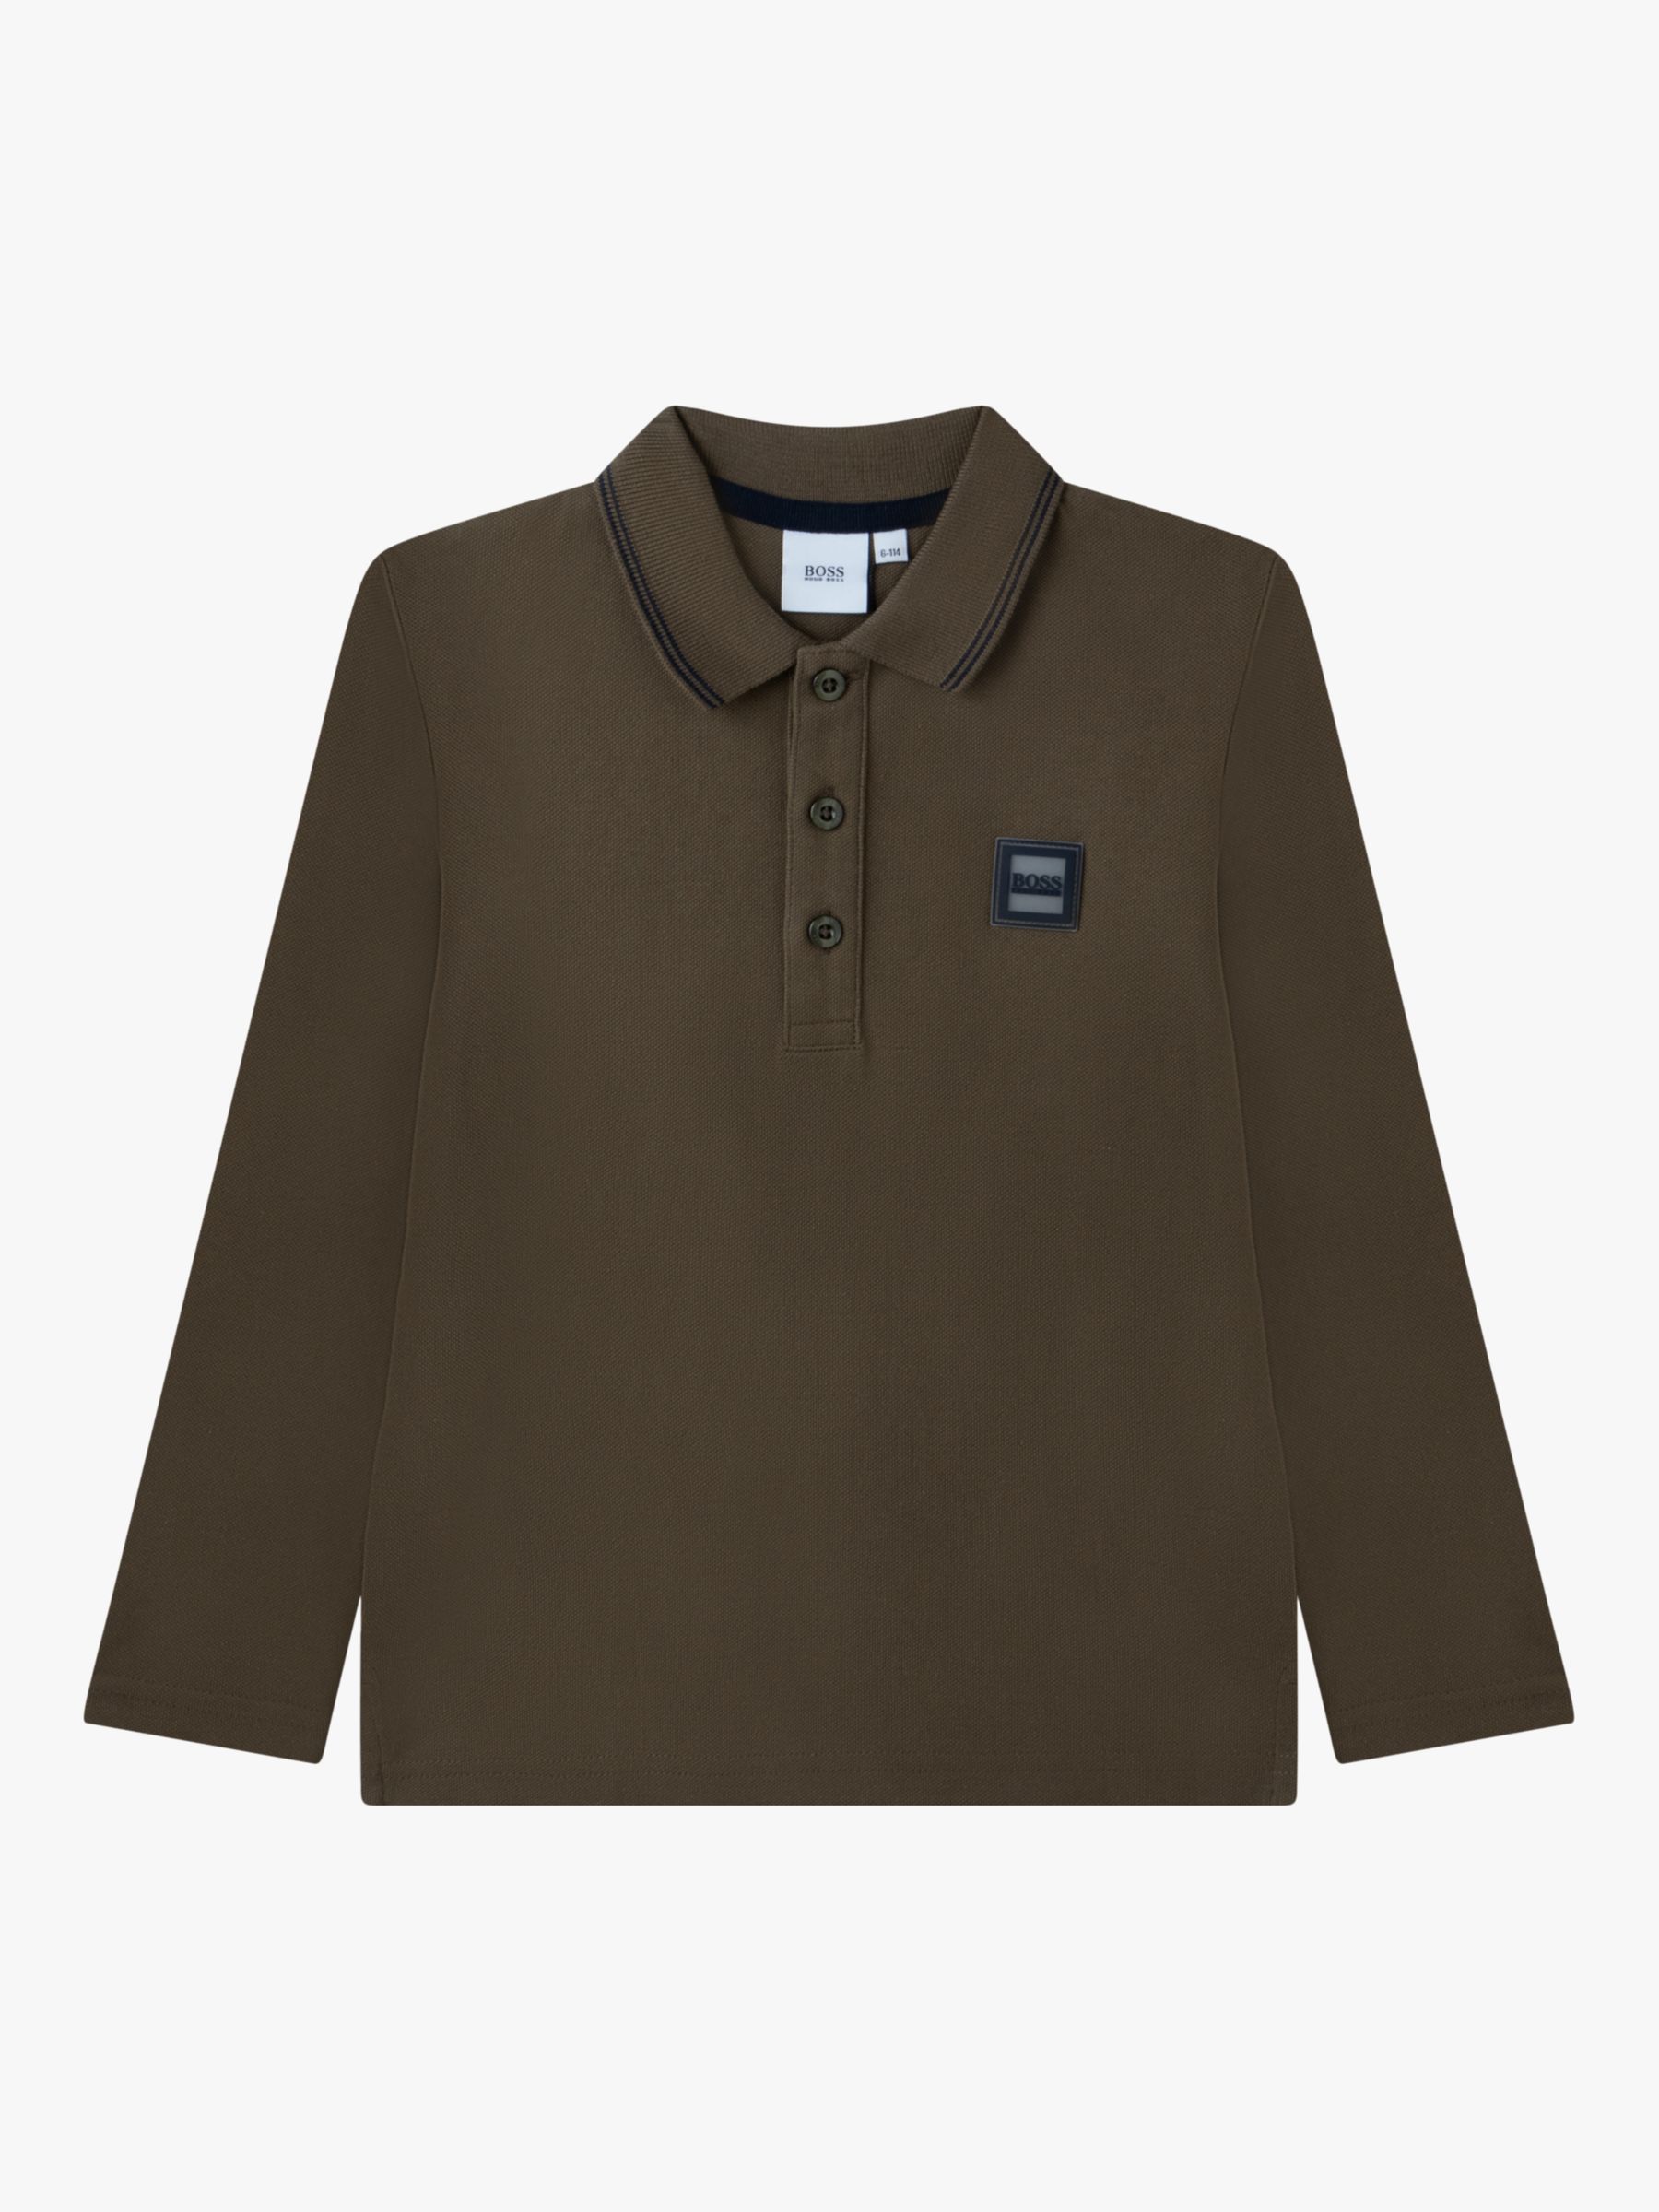 HUGO BOSS Kids' Long Sleeve Pique Cotton Polo Shirt, Khaki, 6 months